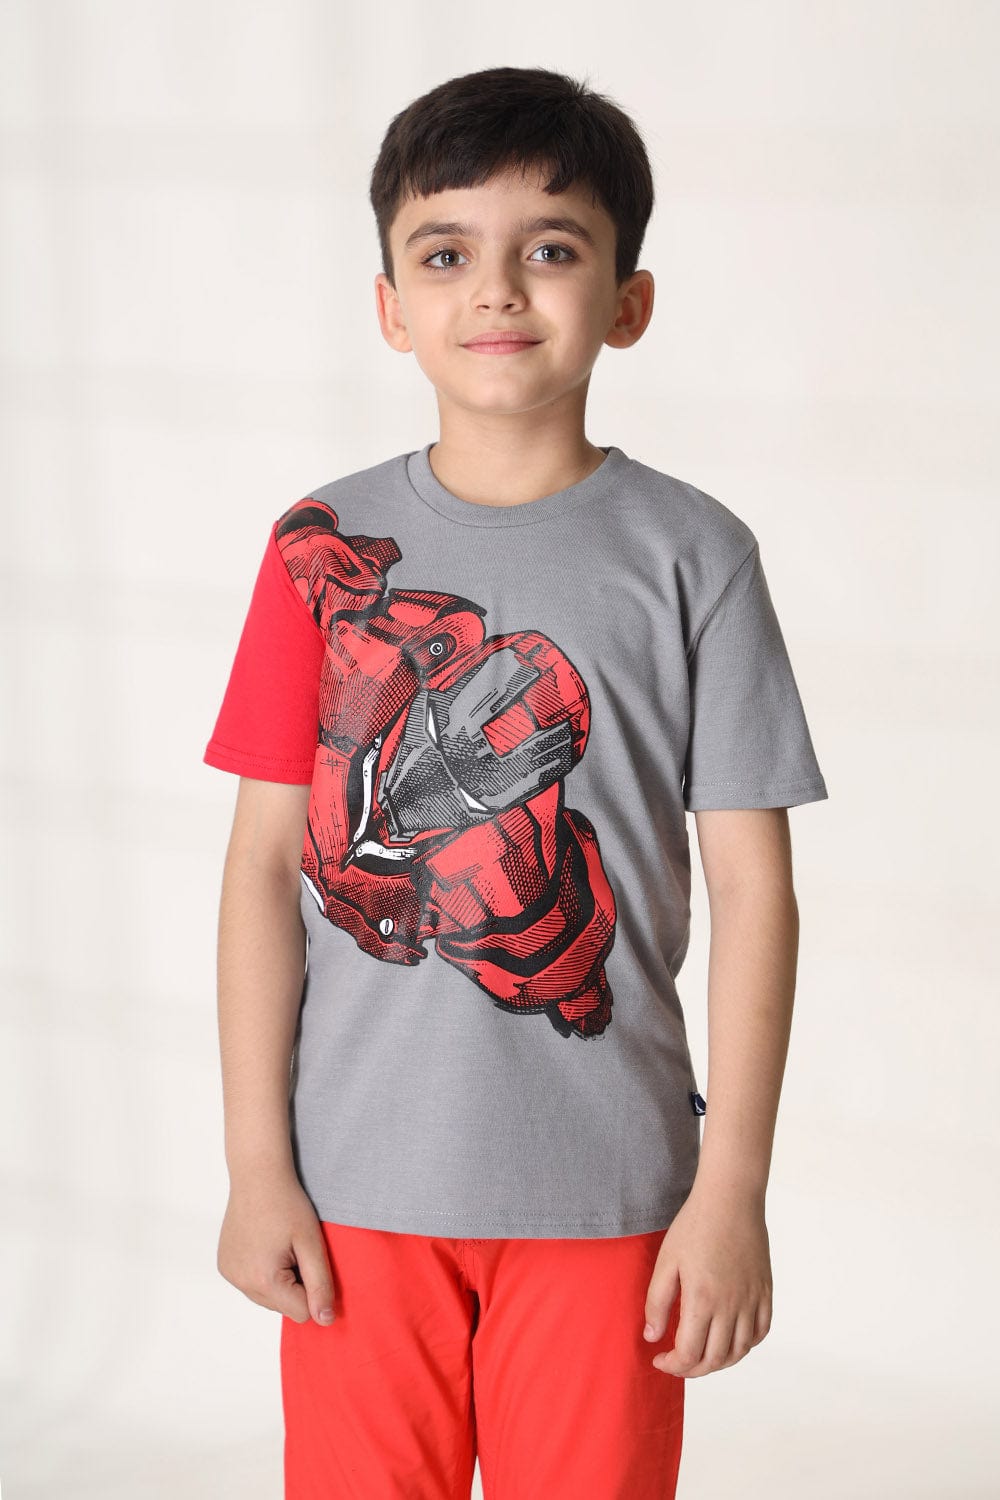 Hope Not Out by Shahid Afridi Boys Knit T-Shirt Boys Grey Iron Man T-Shirt